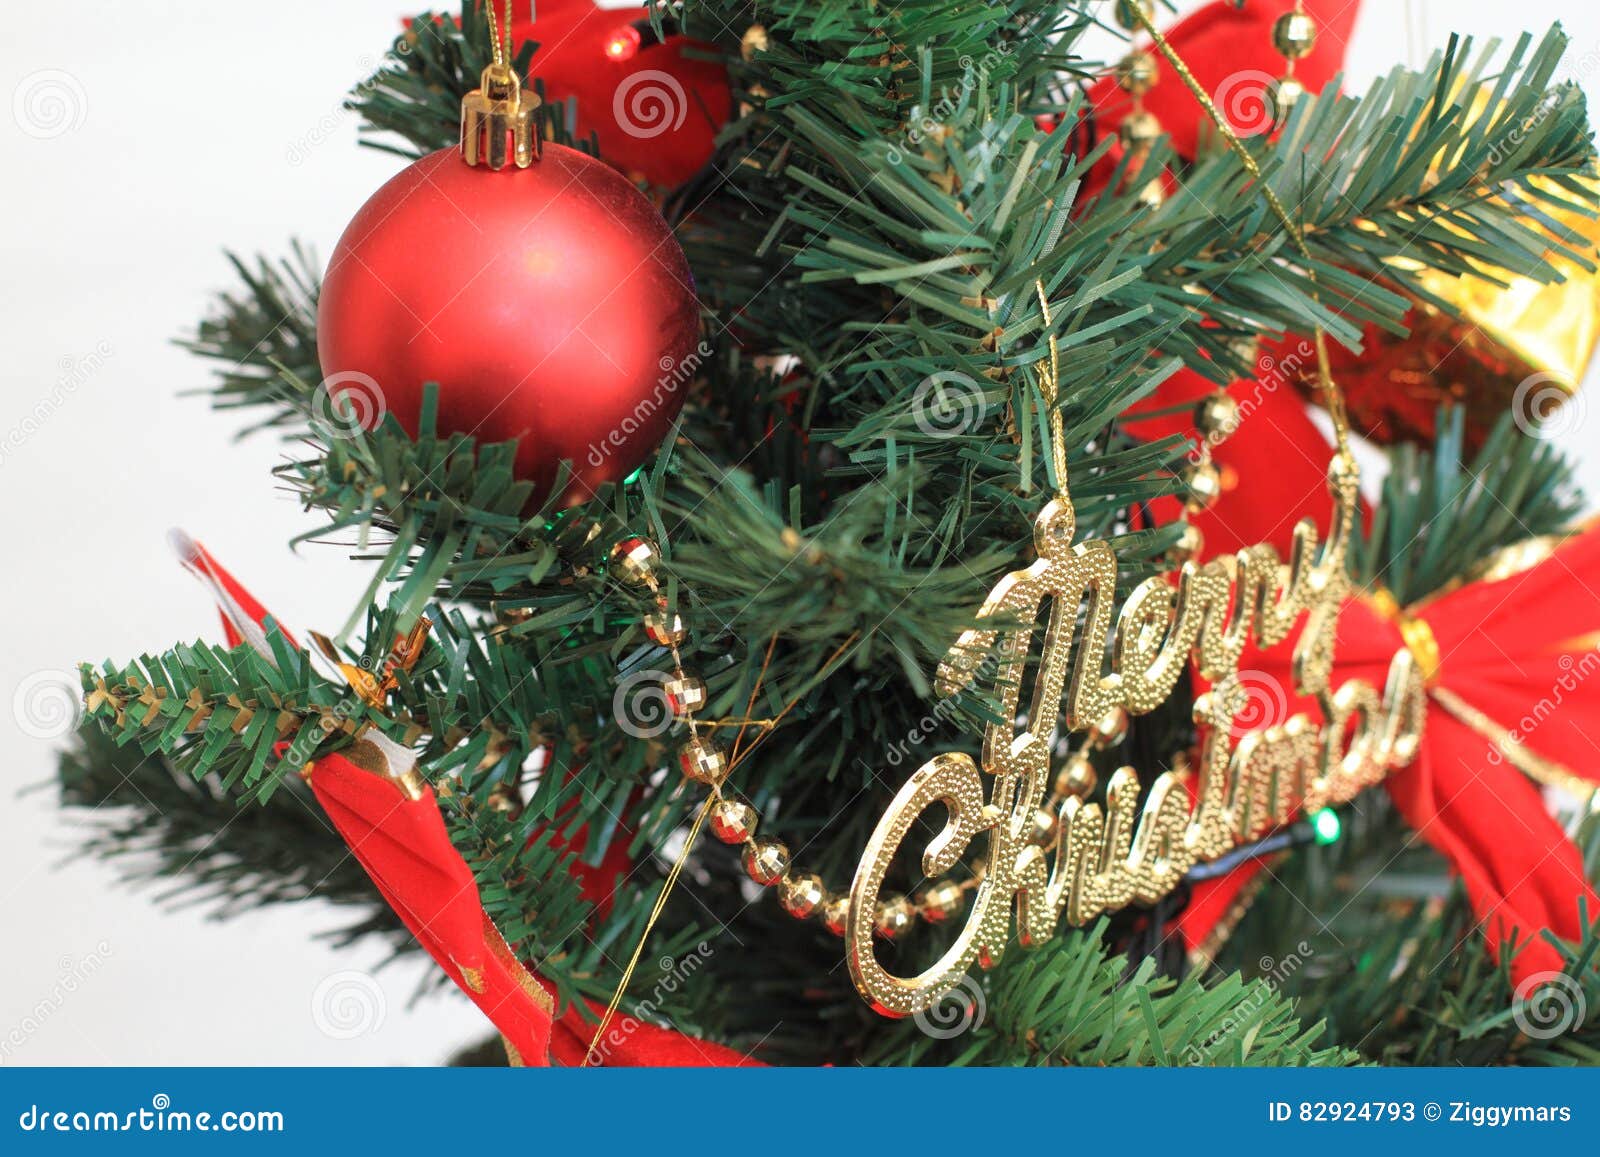 Decolated christmas tree stock image. Image of winter - 82924793